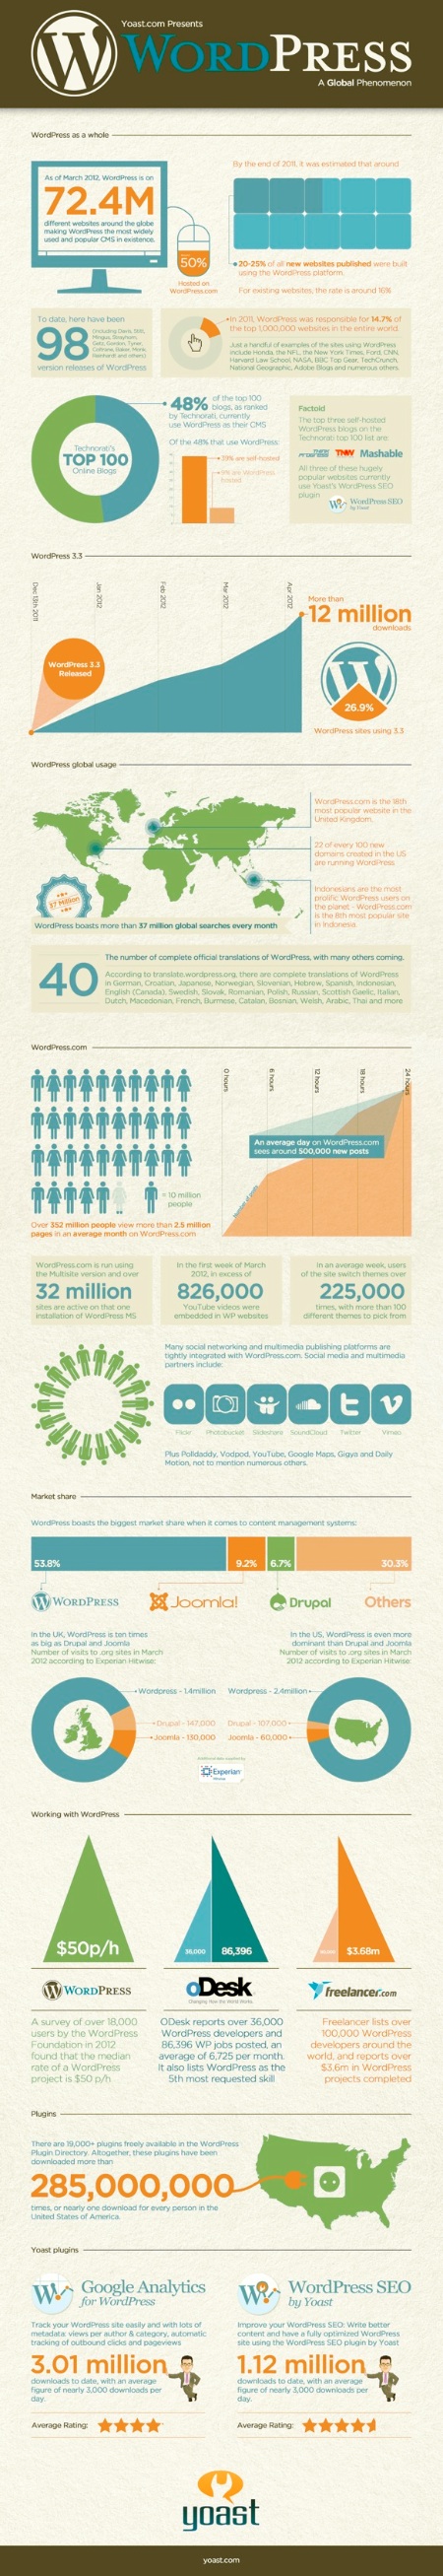 WordPress Stats Infographic